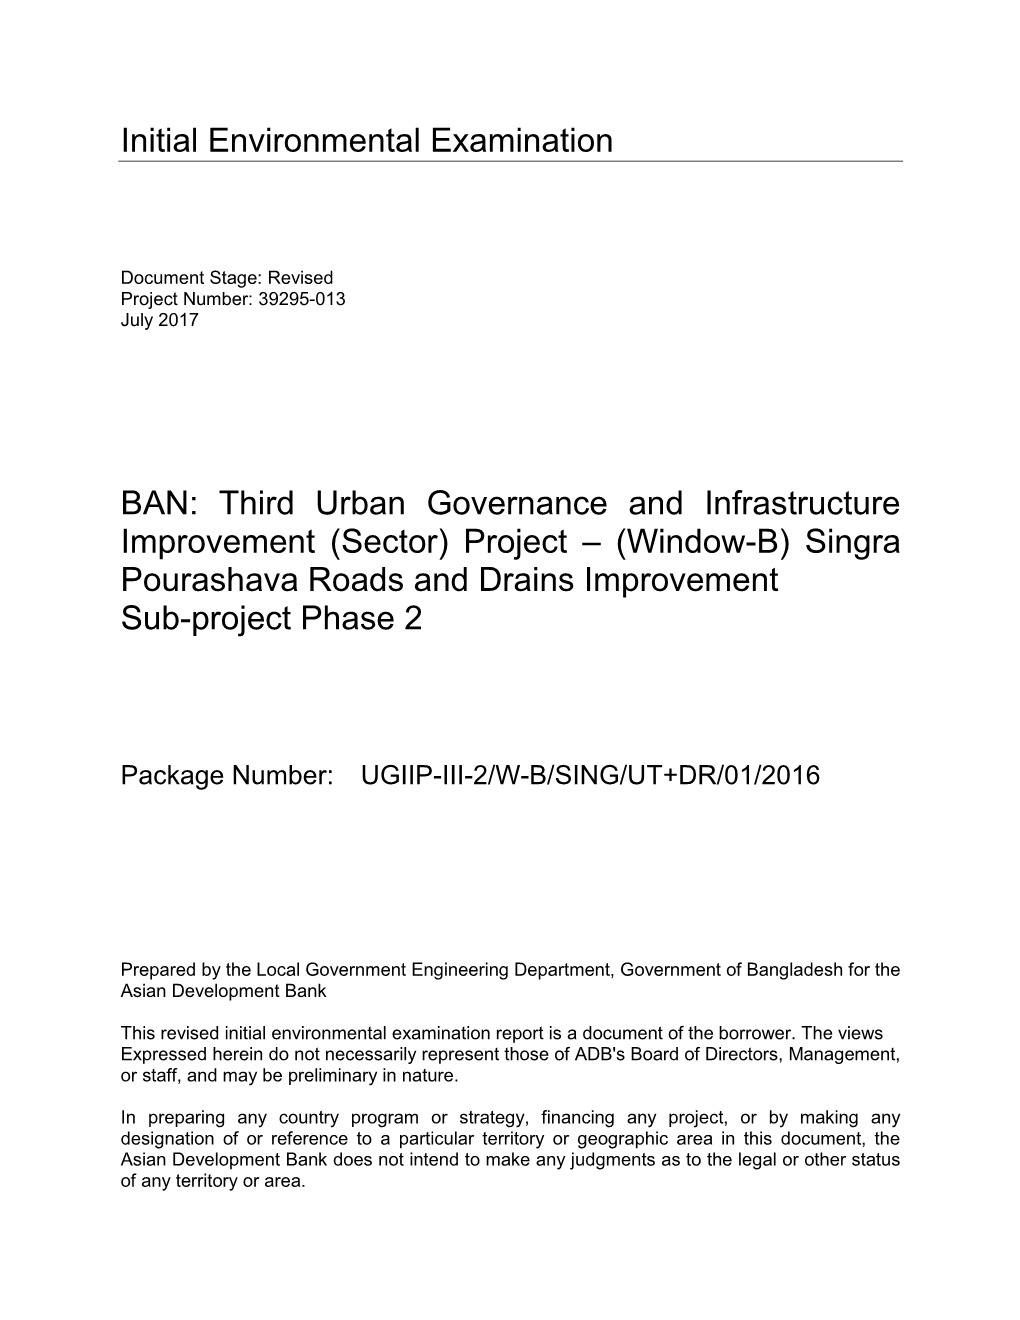 Singra Pourashava Roads and Drains Improvement Sub-Project Phase 2